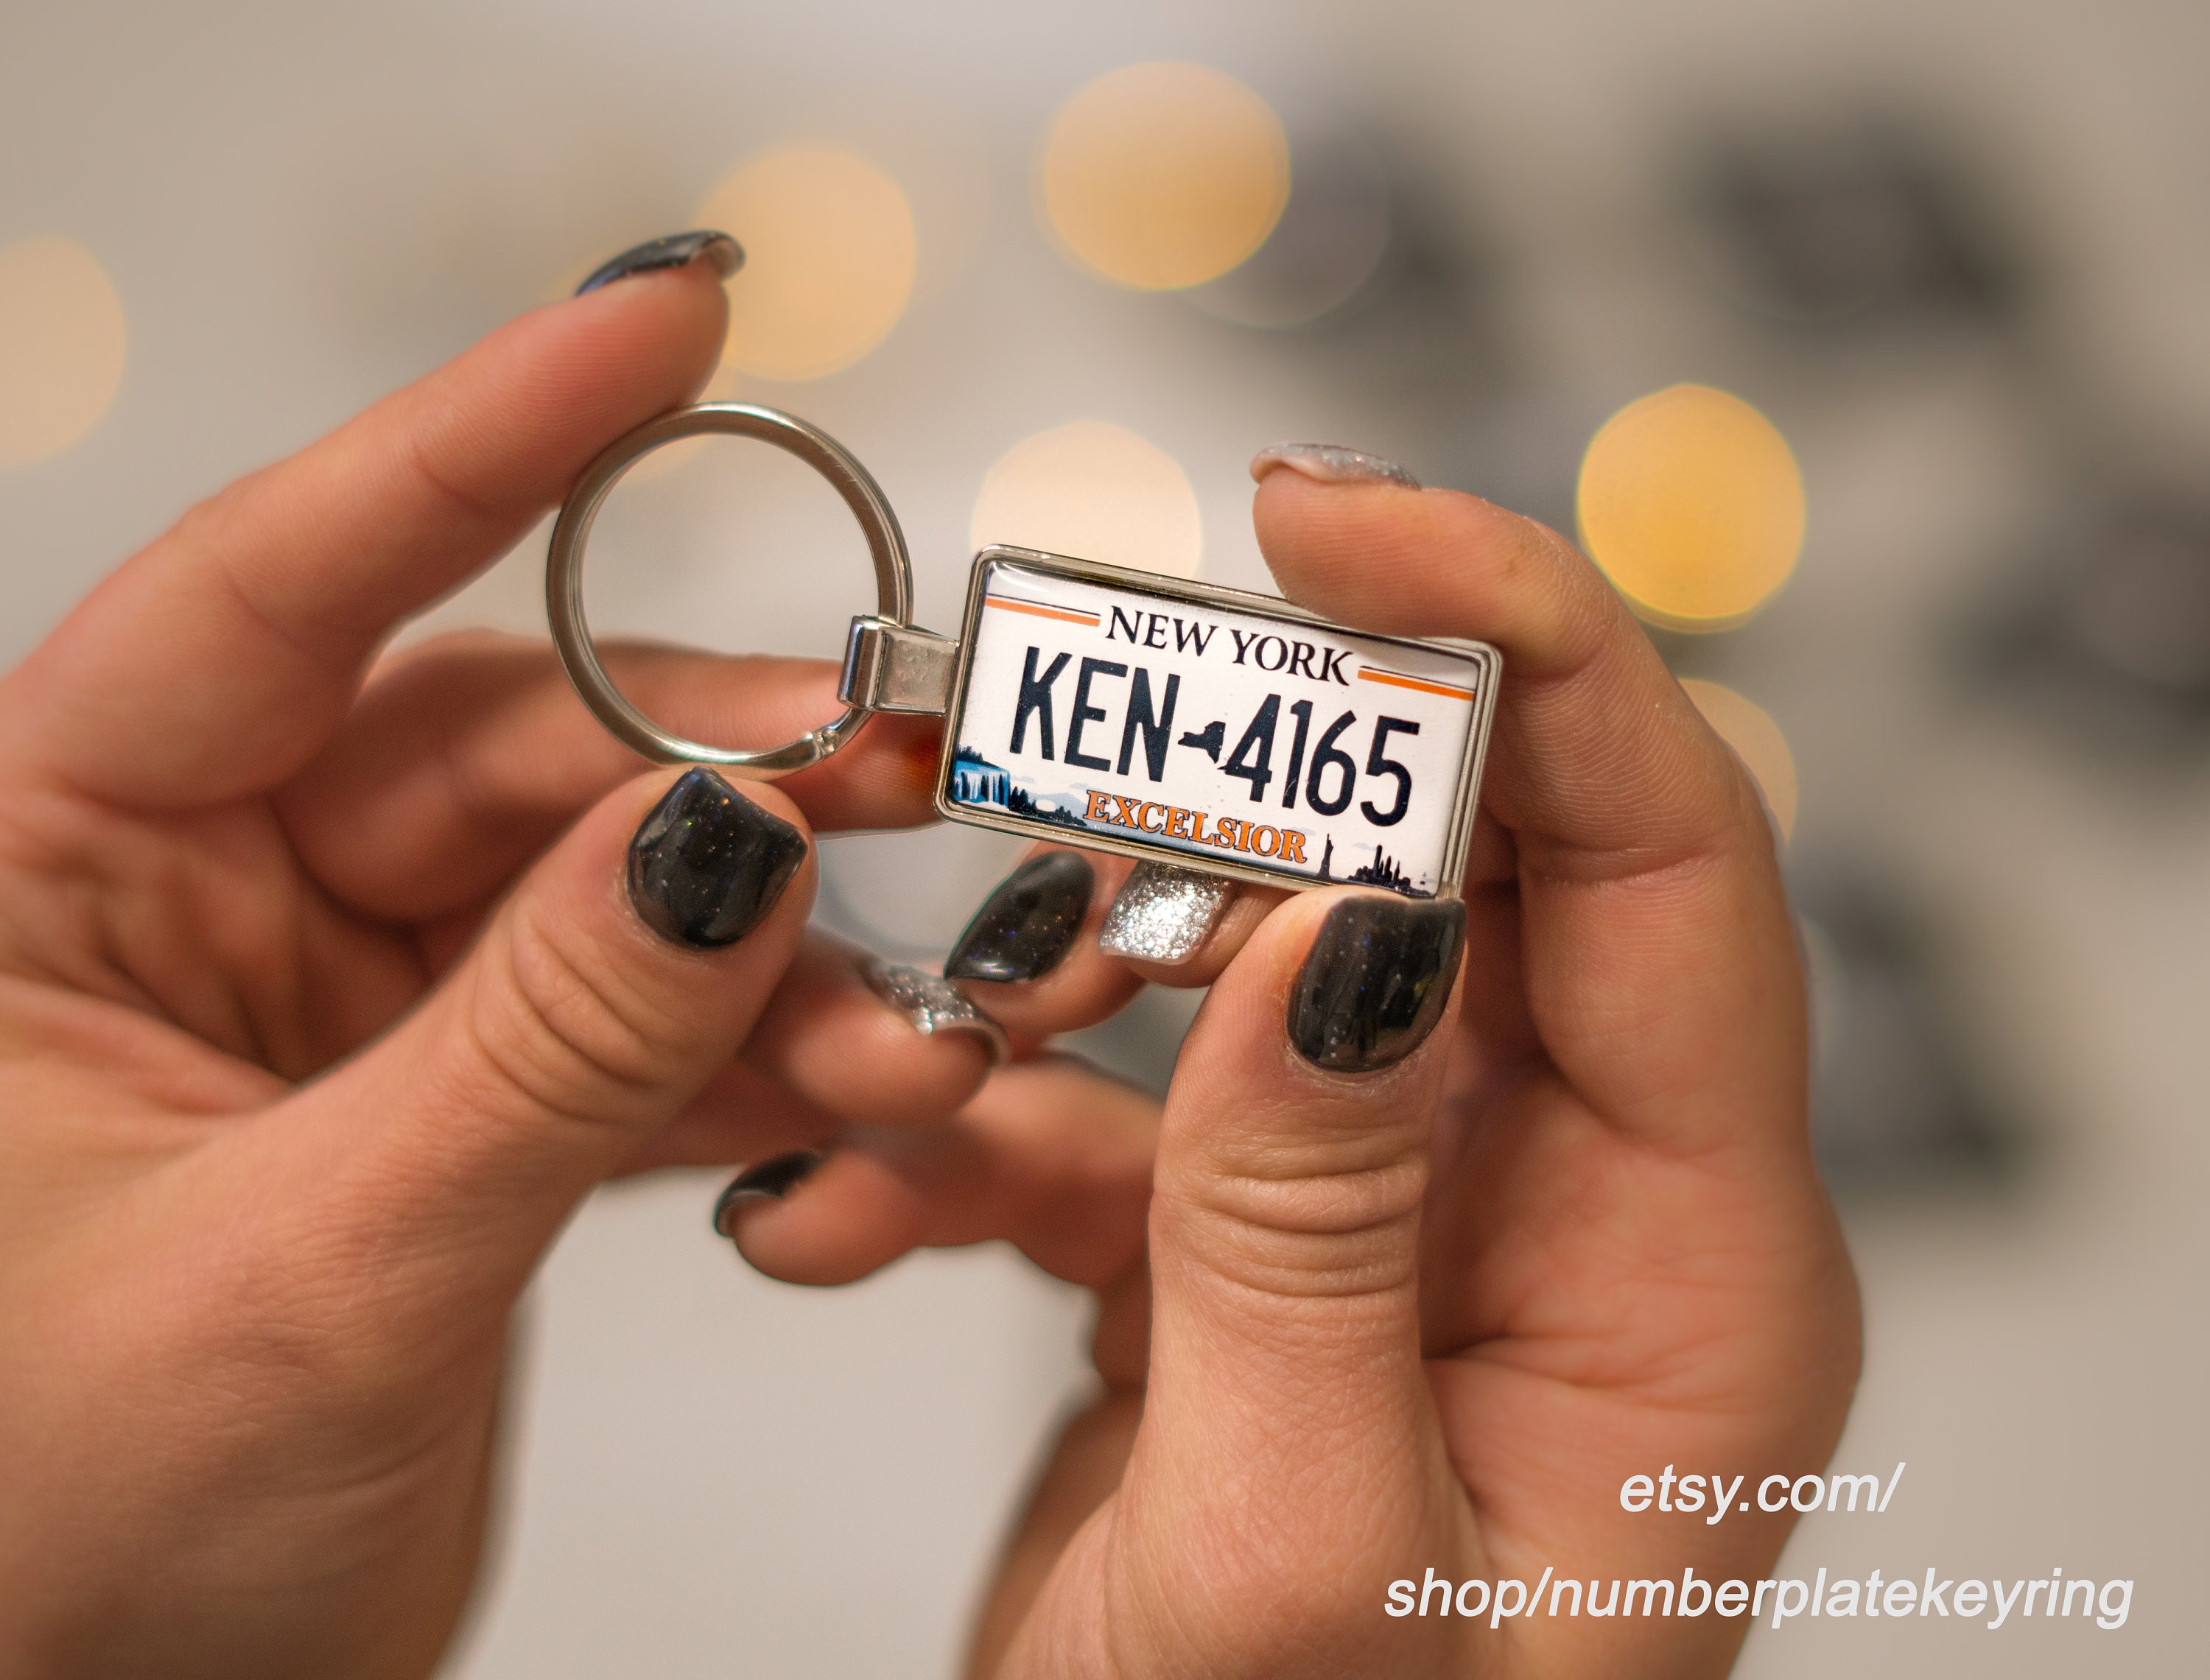 PlateGameUSA Louisiana 'La' License Plate Custom Keychain